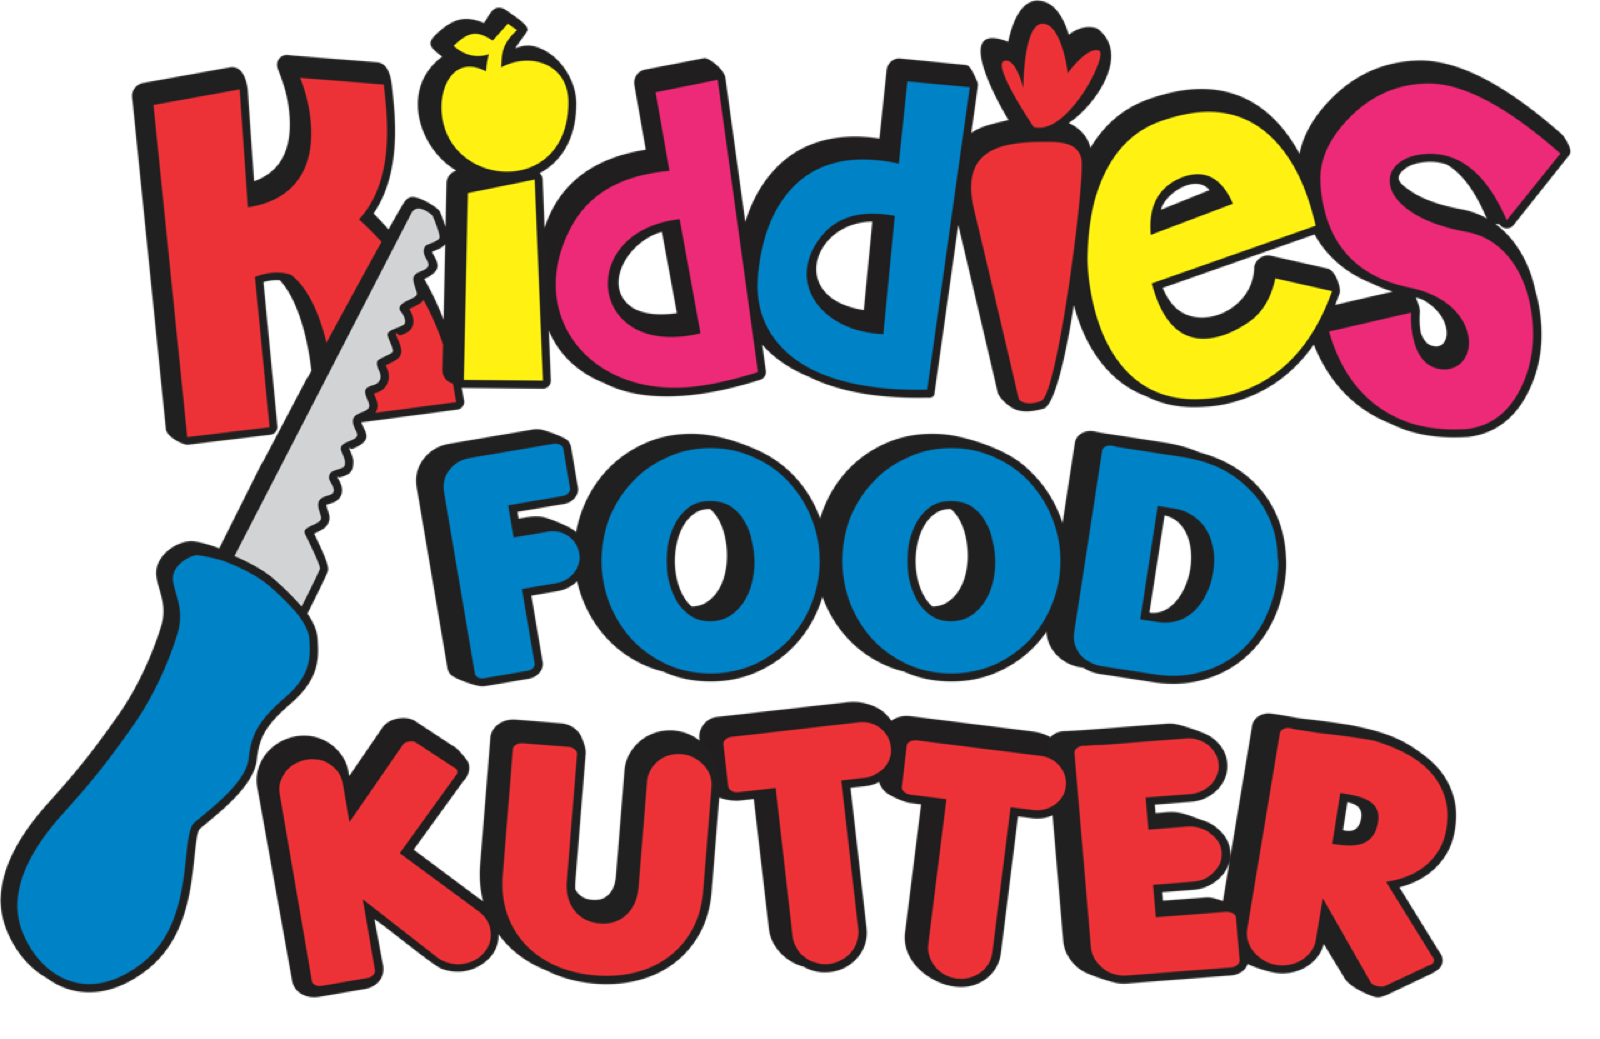 Kiddies Food Kutter UK Ireland Europe